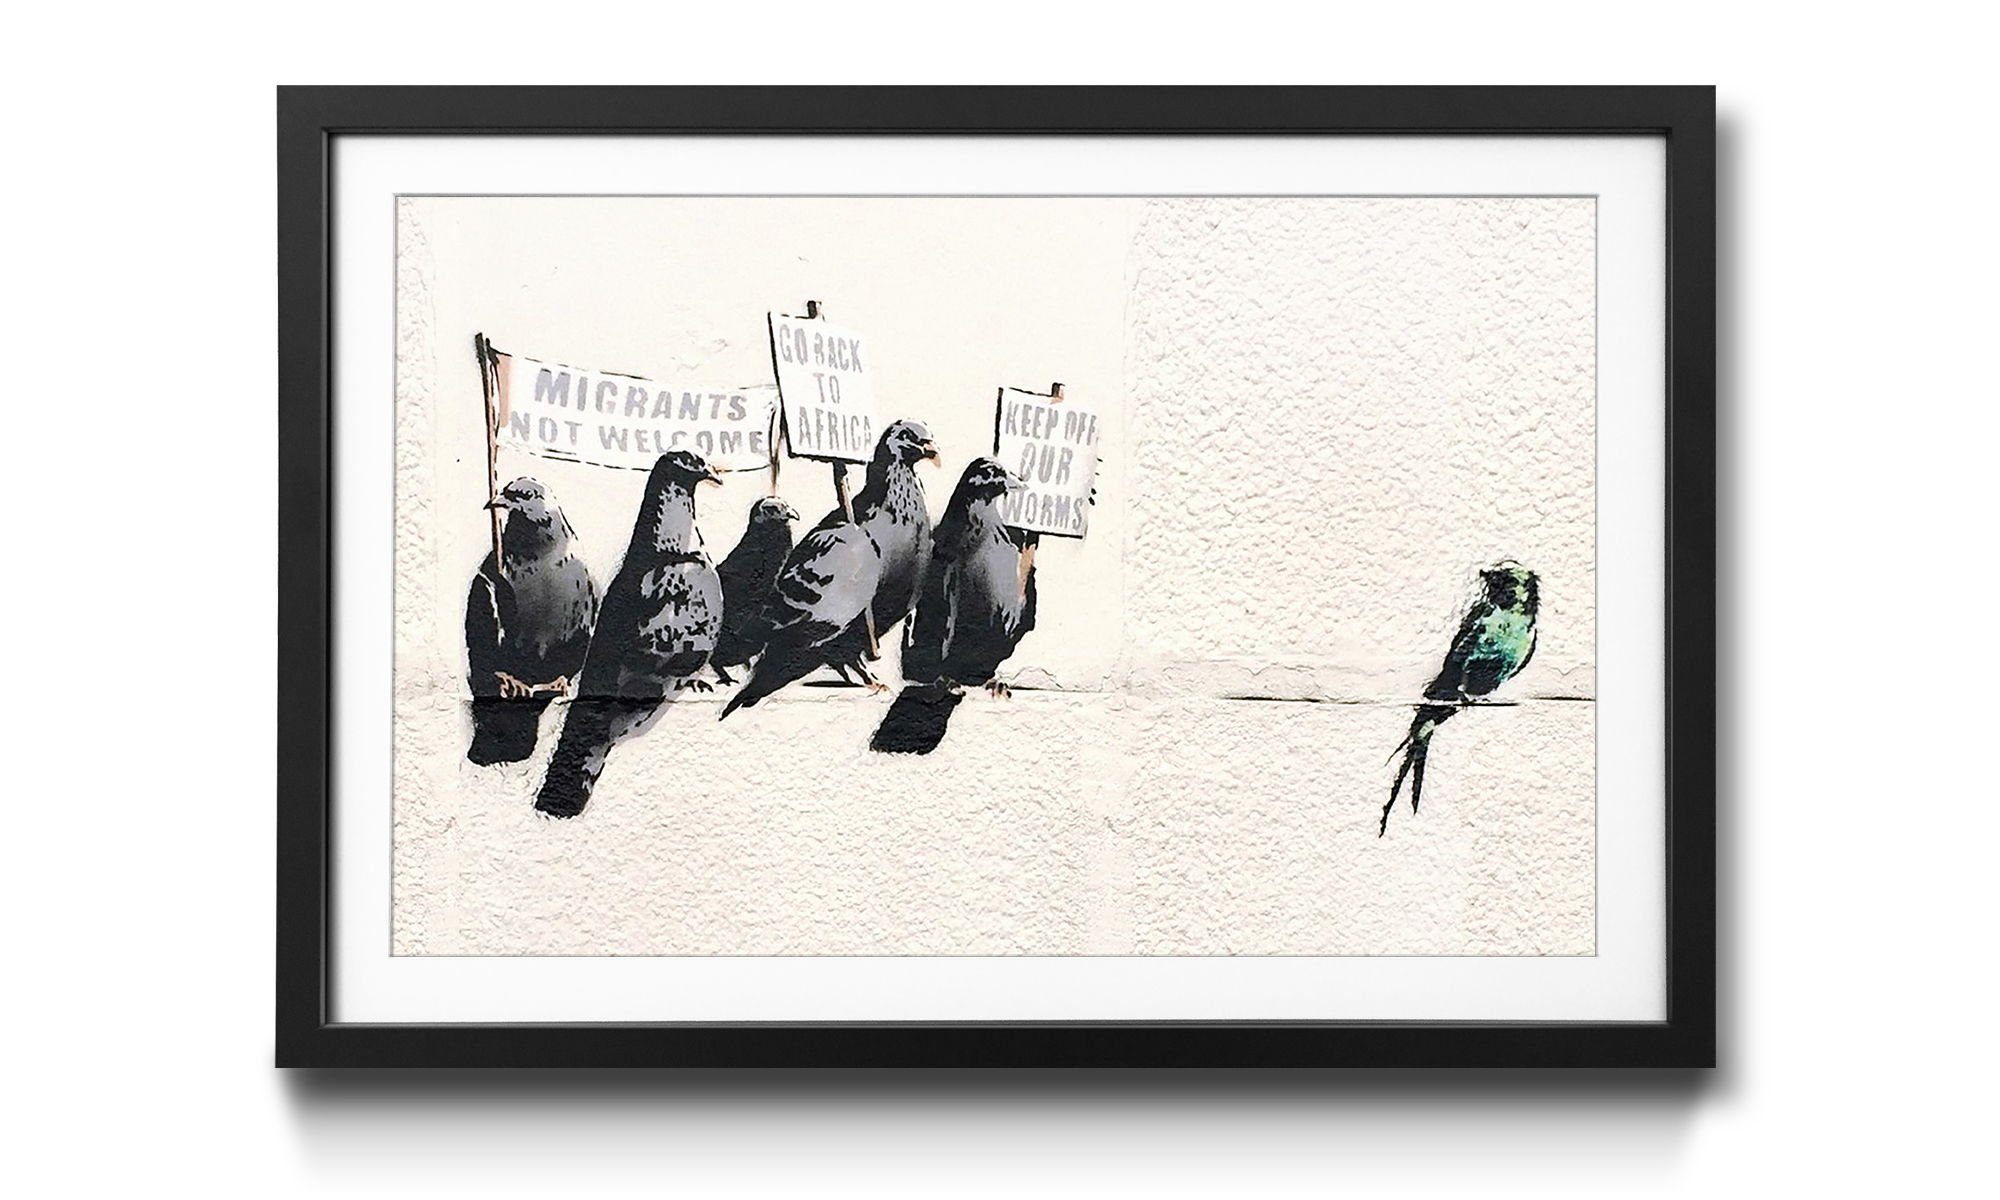 WandbilderXXL Kunstdruck Banksy No.11, Banksy, Wandbild, in 4 Größen erhältlich